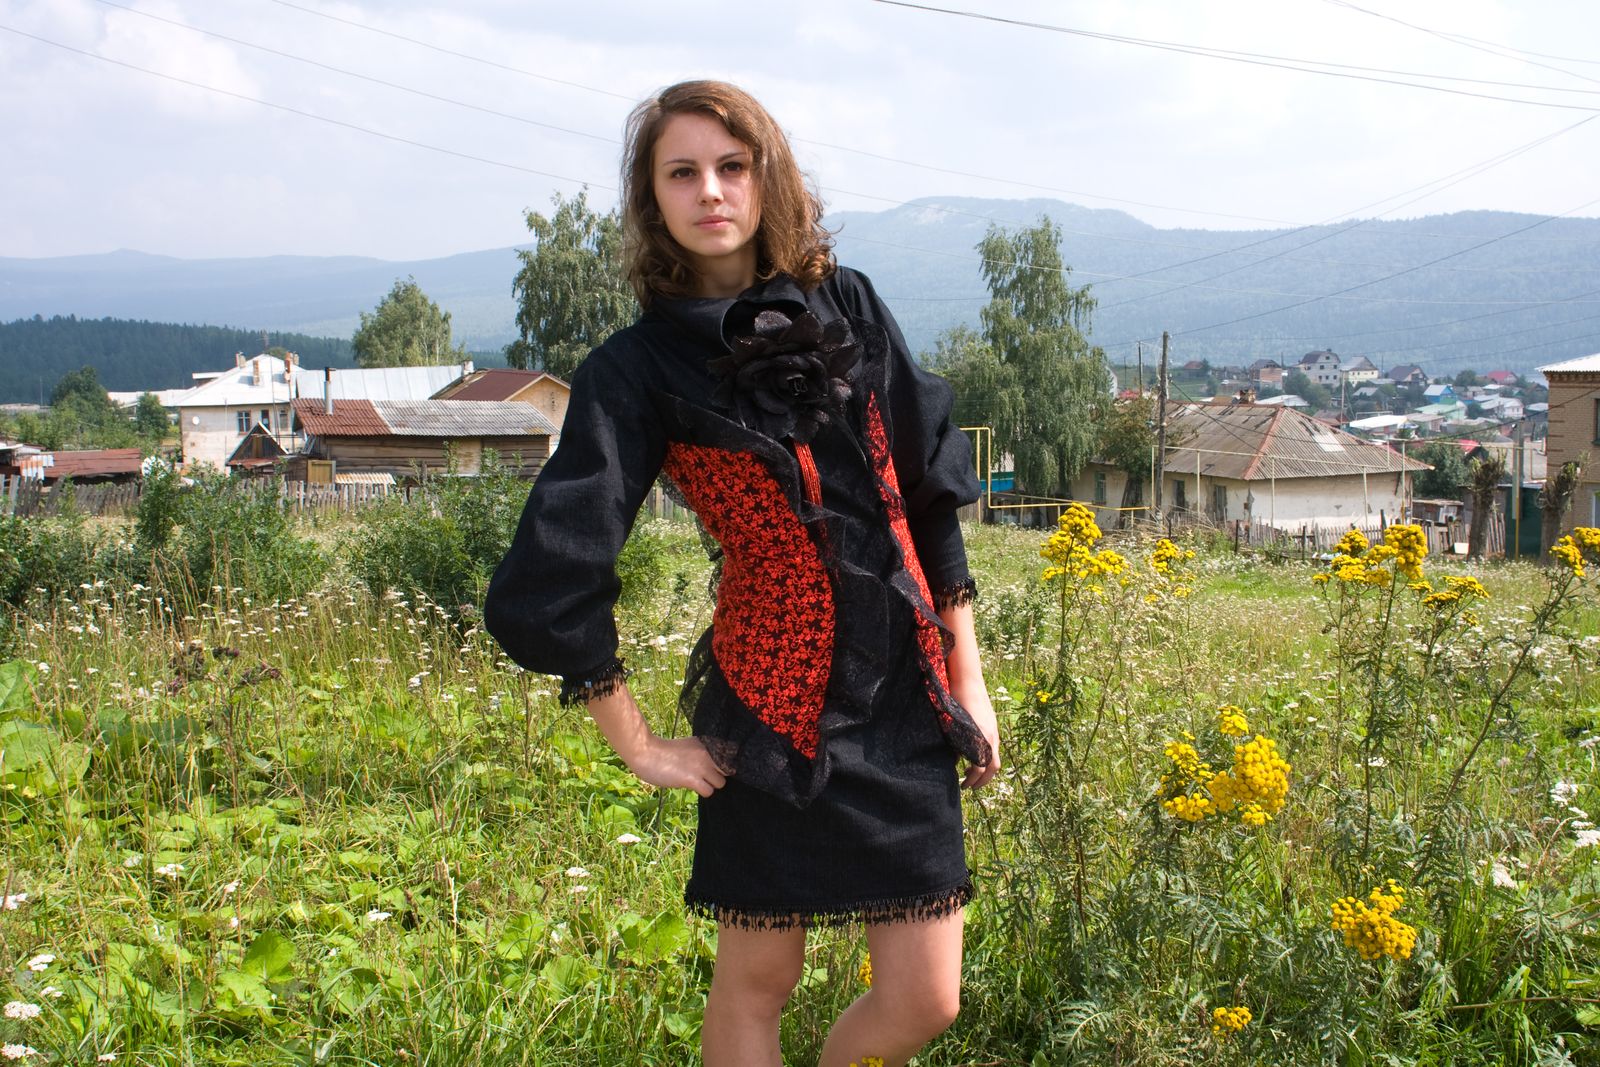 © Ekaterina Tolkacheva - Image from the Zlatoust fashion photography project